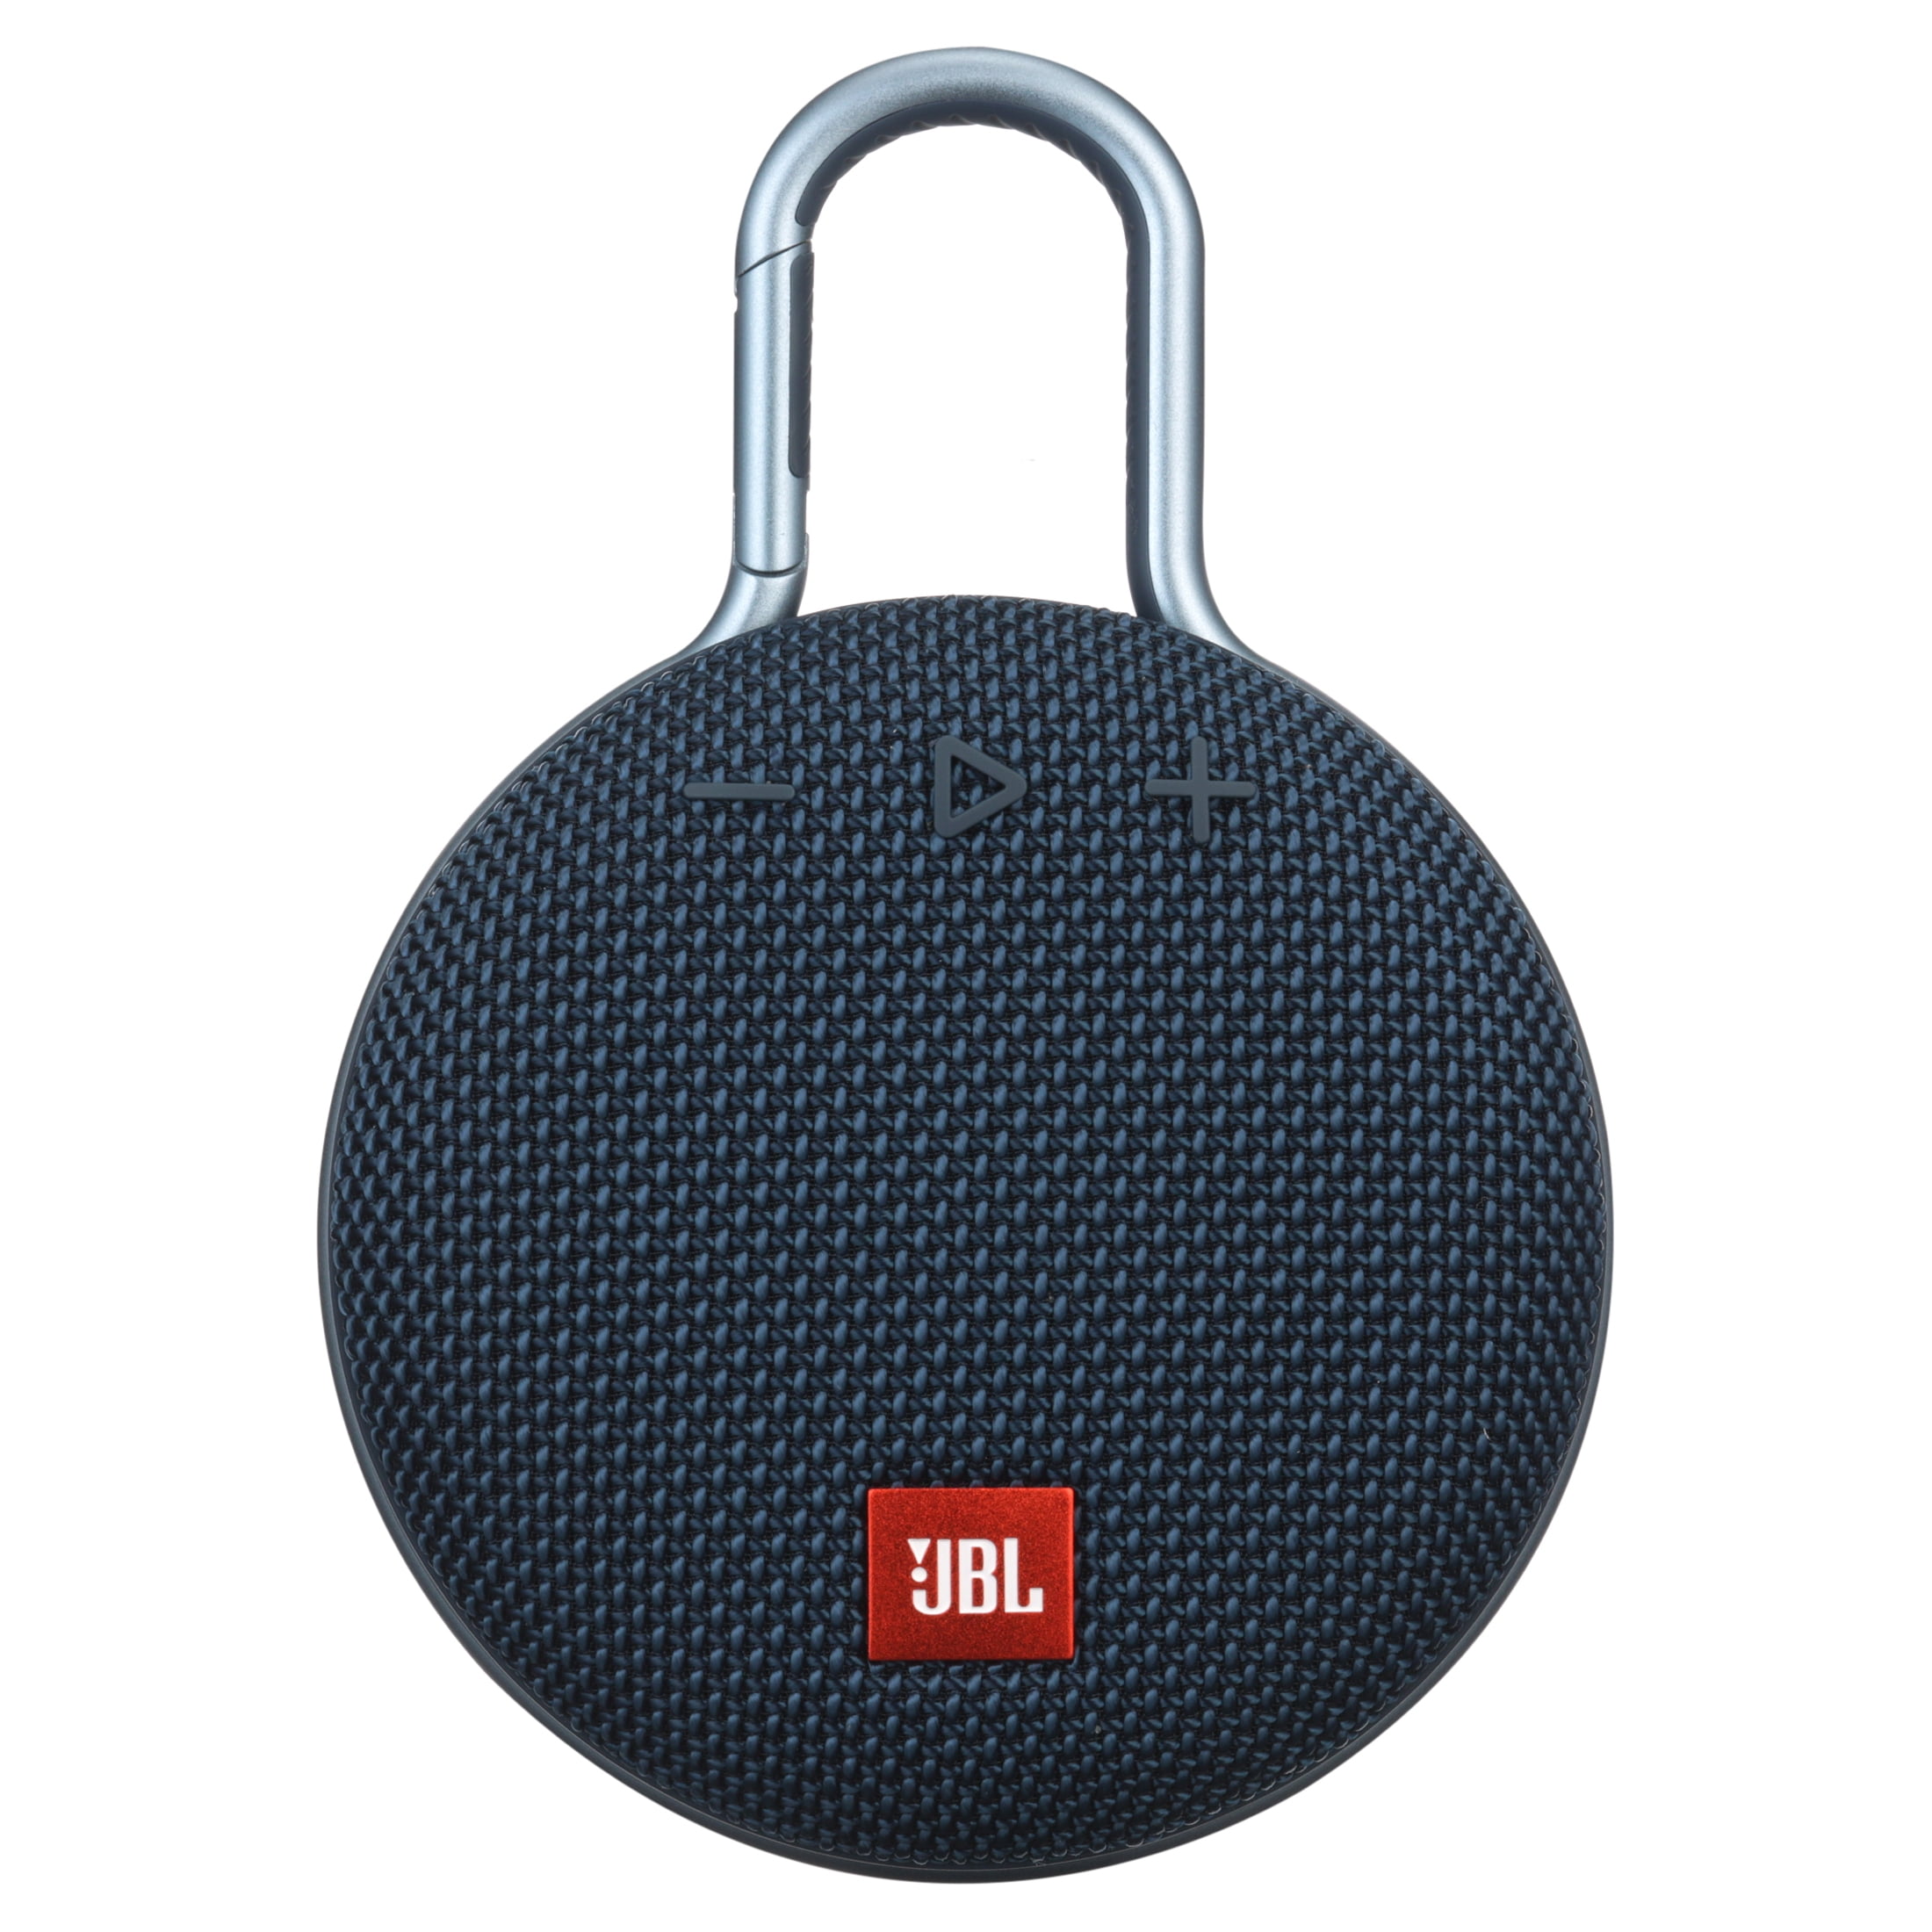  JBL JBLCLIP3TEAL Clip 3 Portable Waterproof Wireless Bluetooth  Speaker - Teal, 6.5 X 4.3 X 2 : Electronics